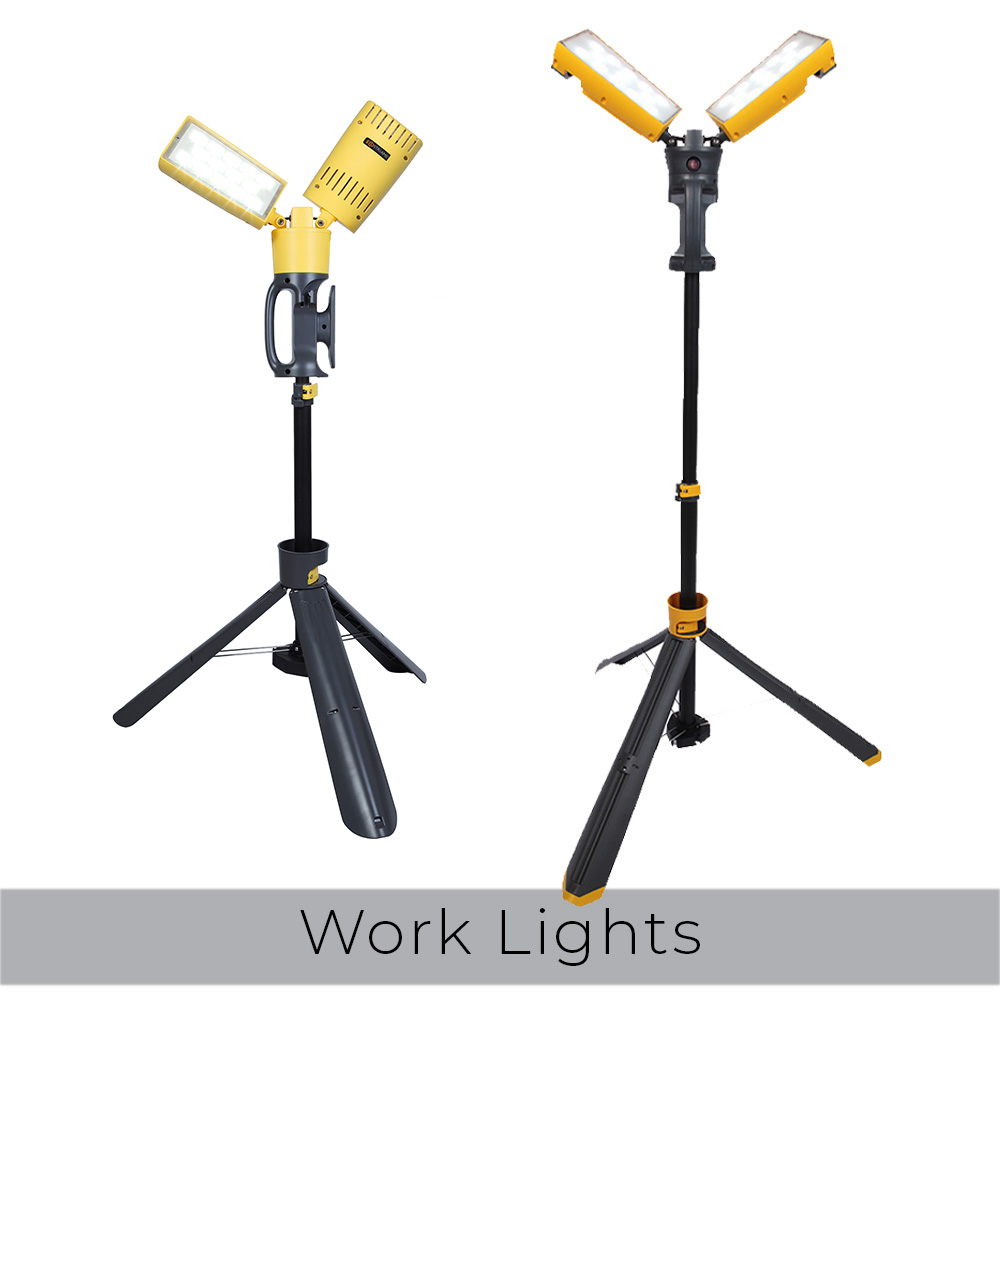 naturaled temporary work light fixtures